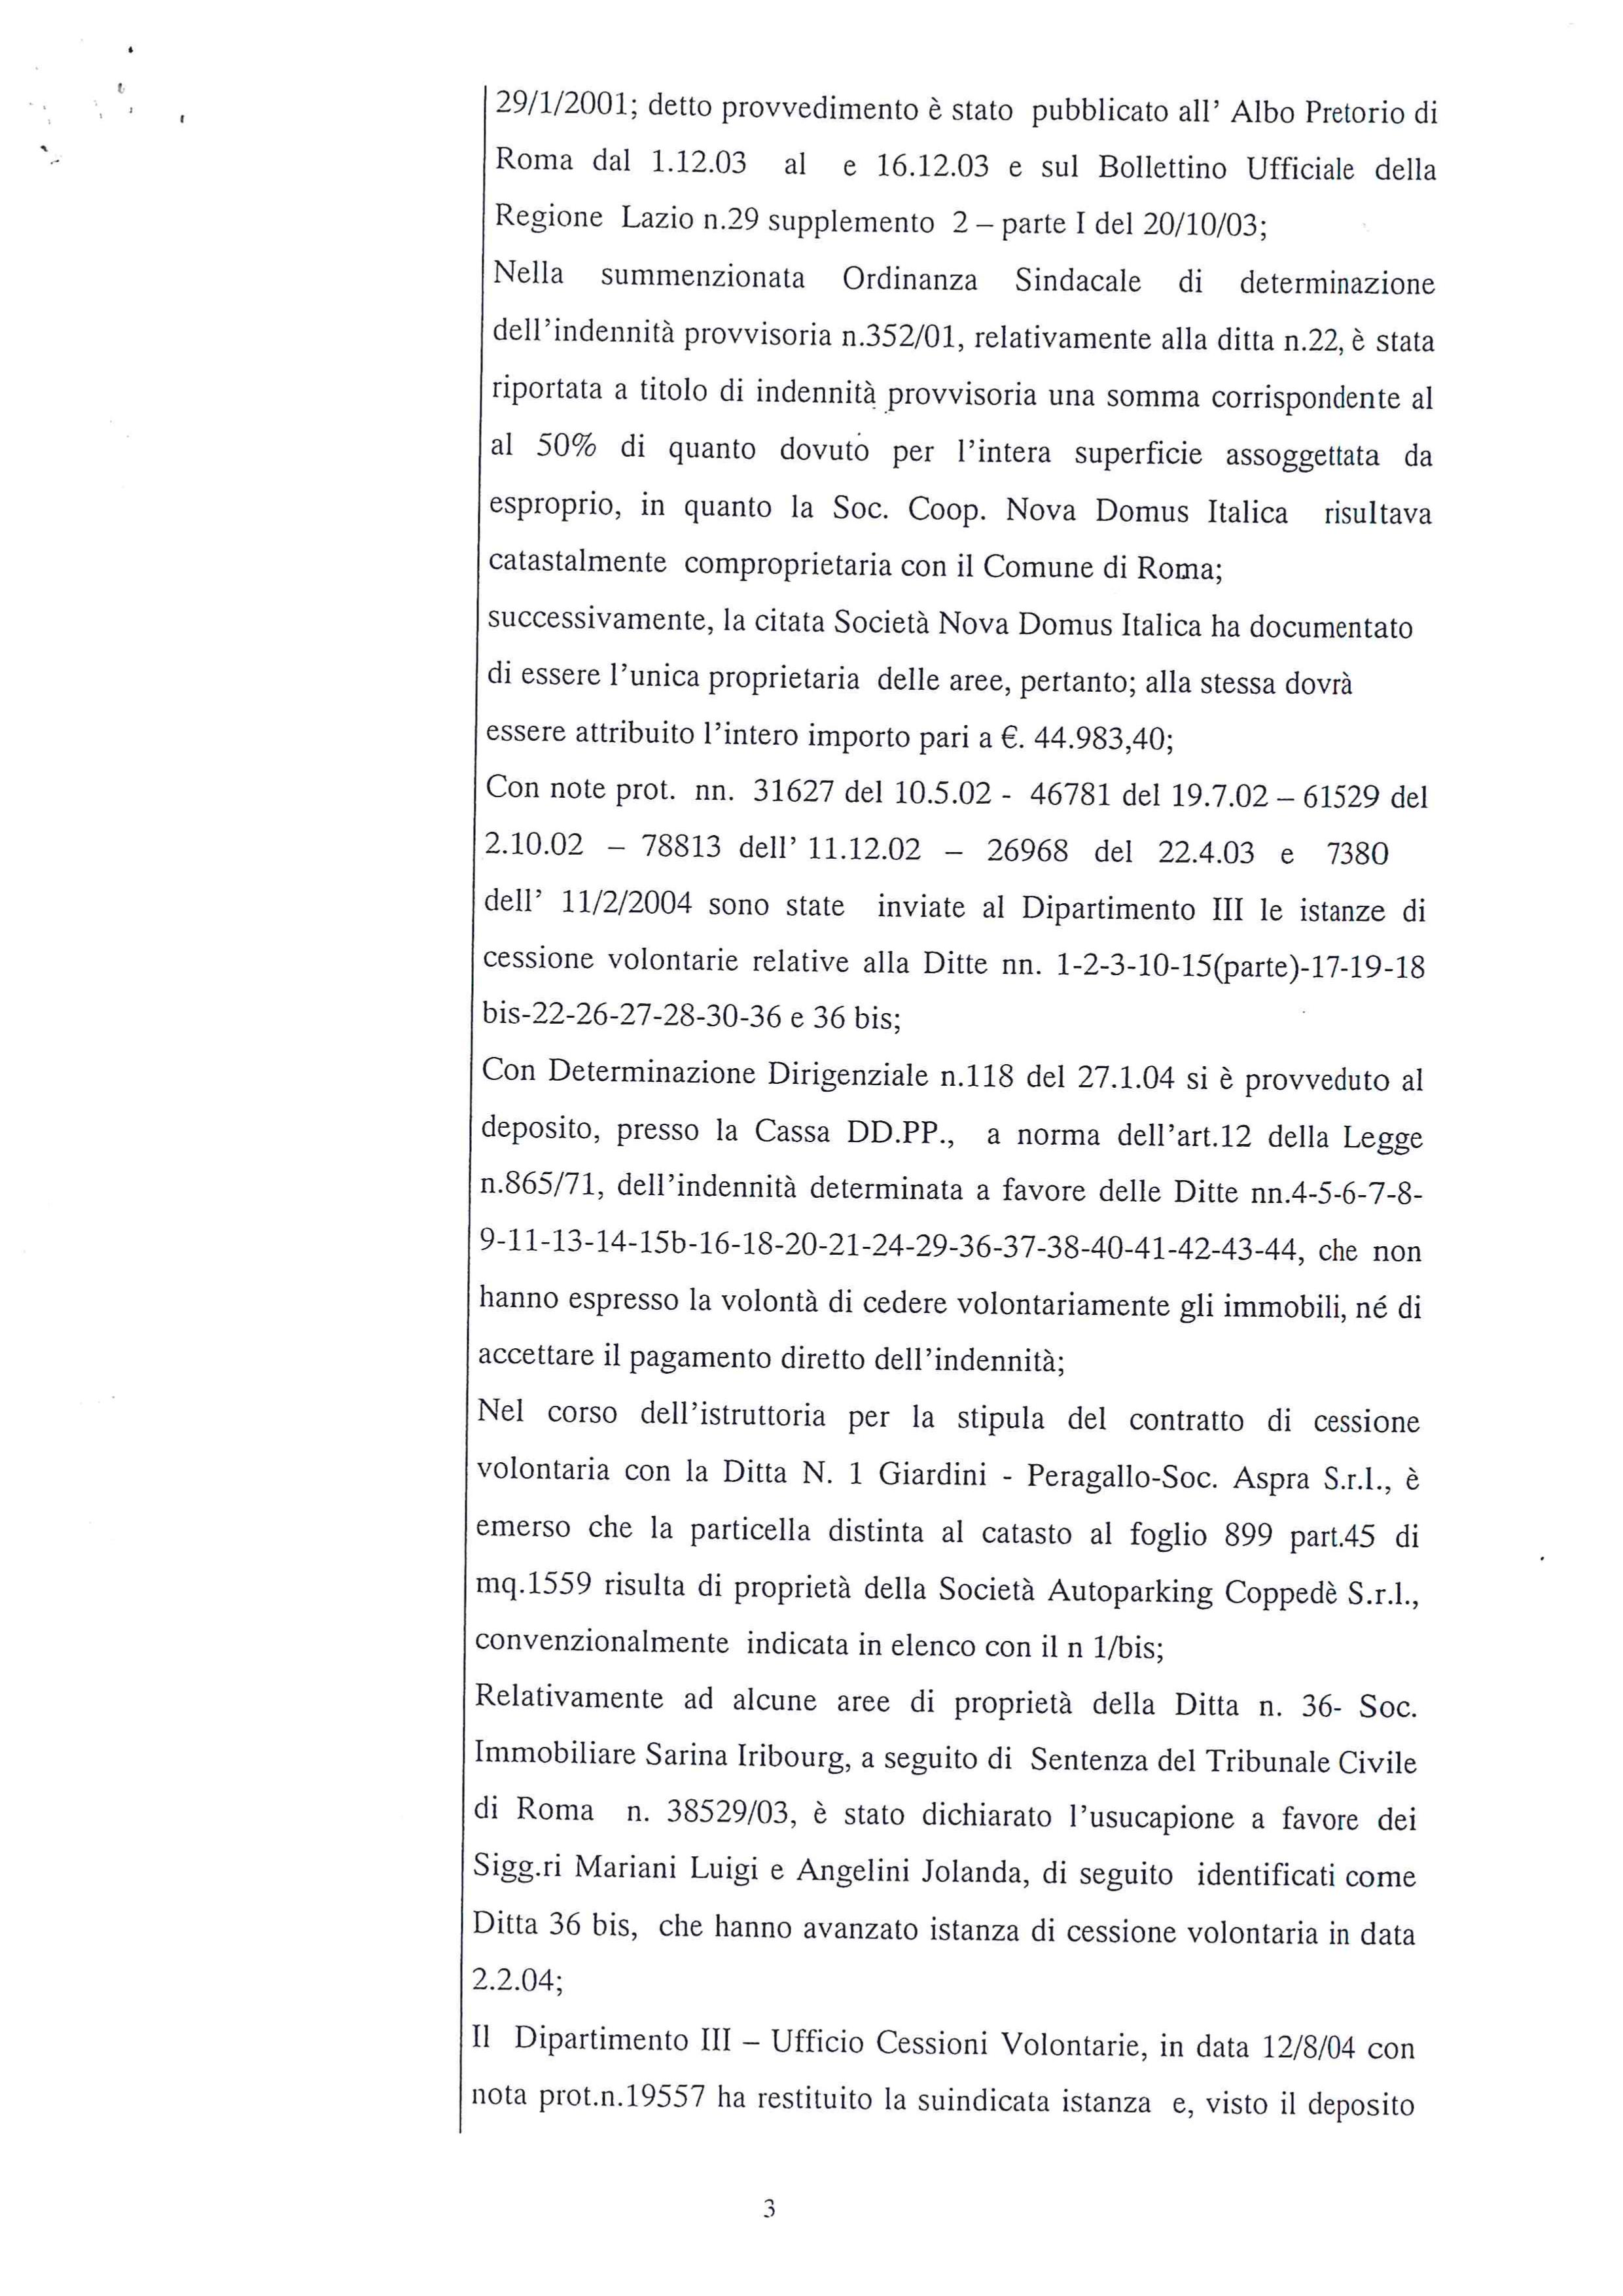 2005 Decreto esproprio Veltroni 10